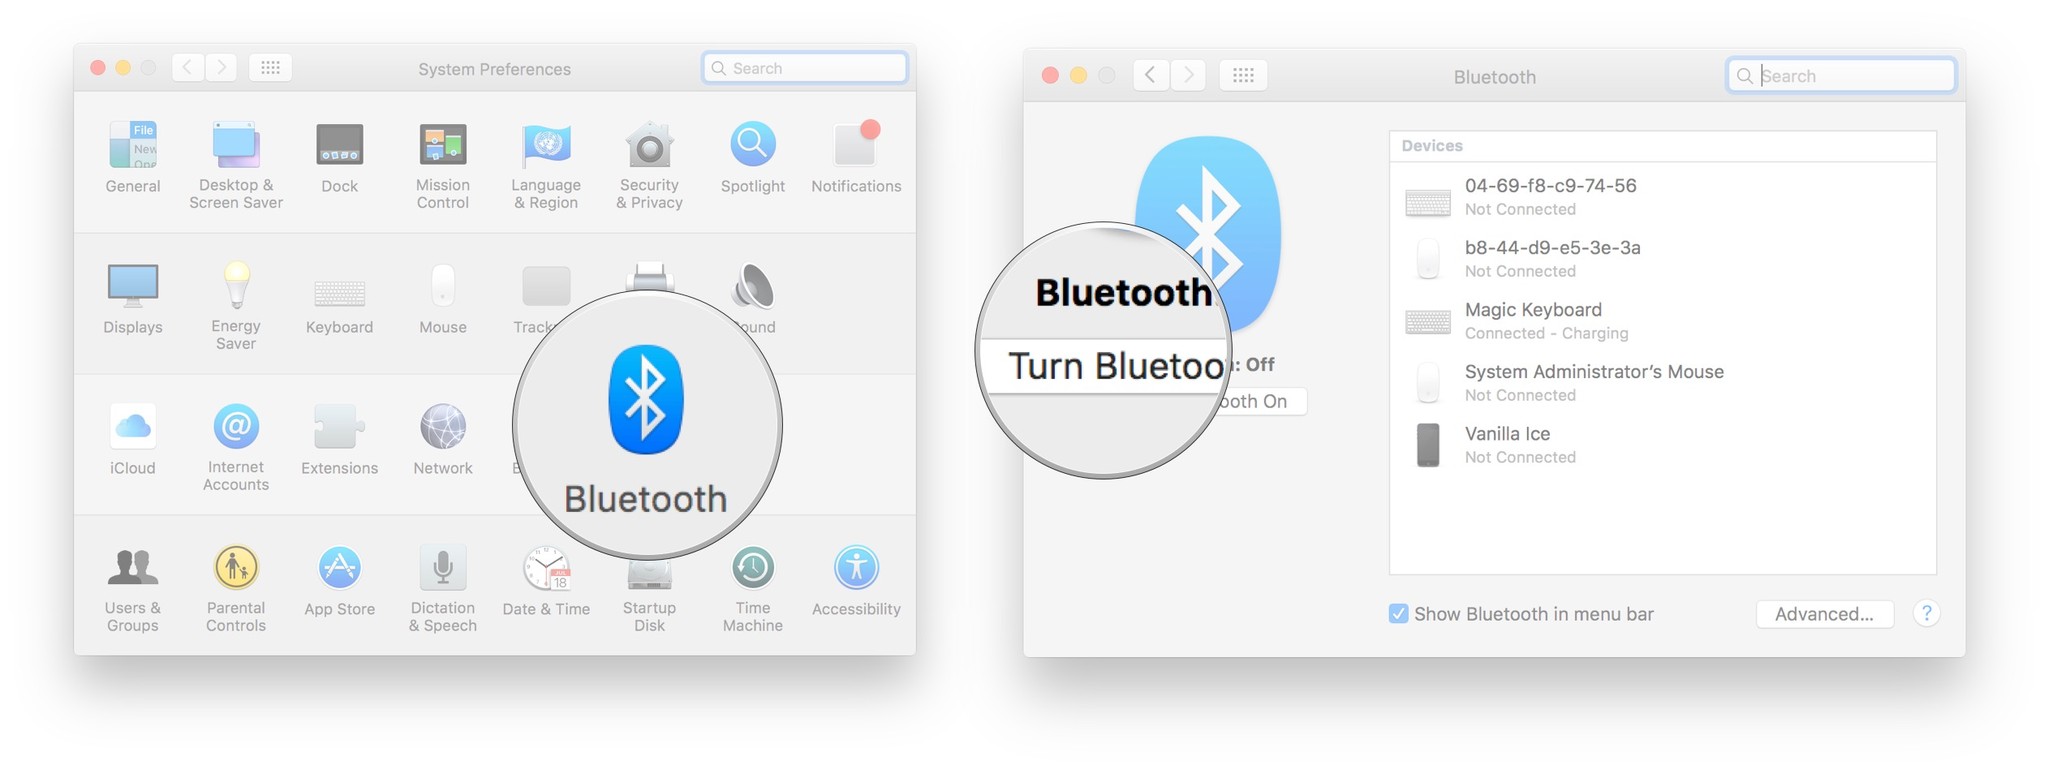 Нажмите Bluetooth, а затем нажмите кнопку «Включить Bluetooth».